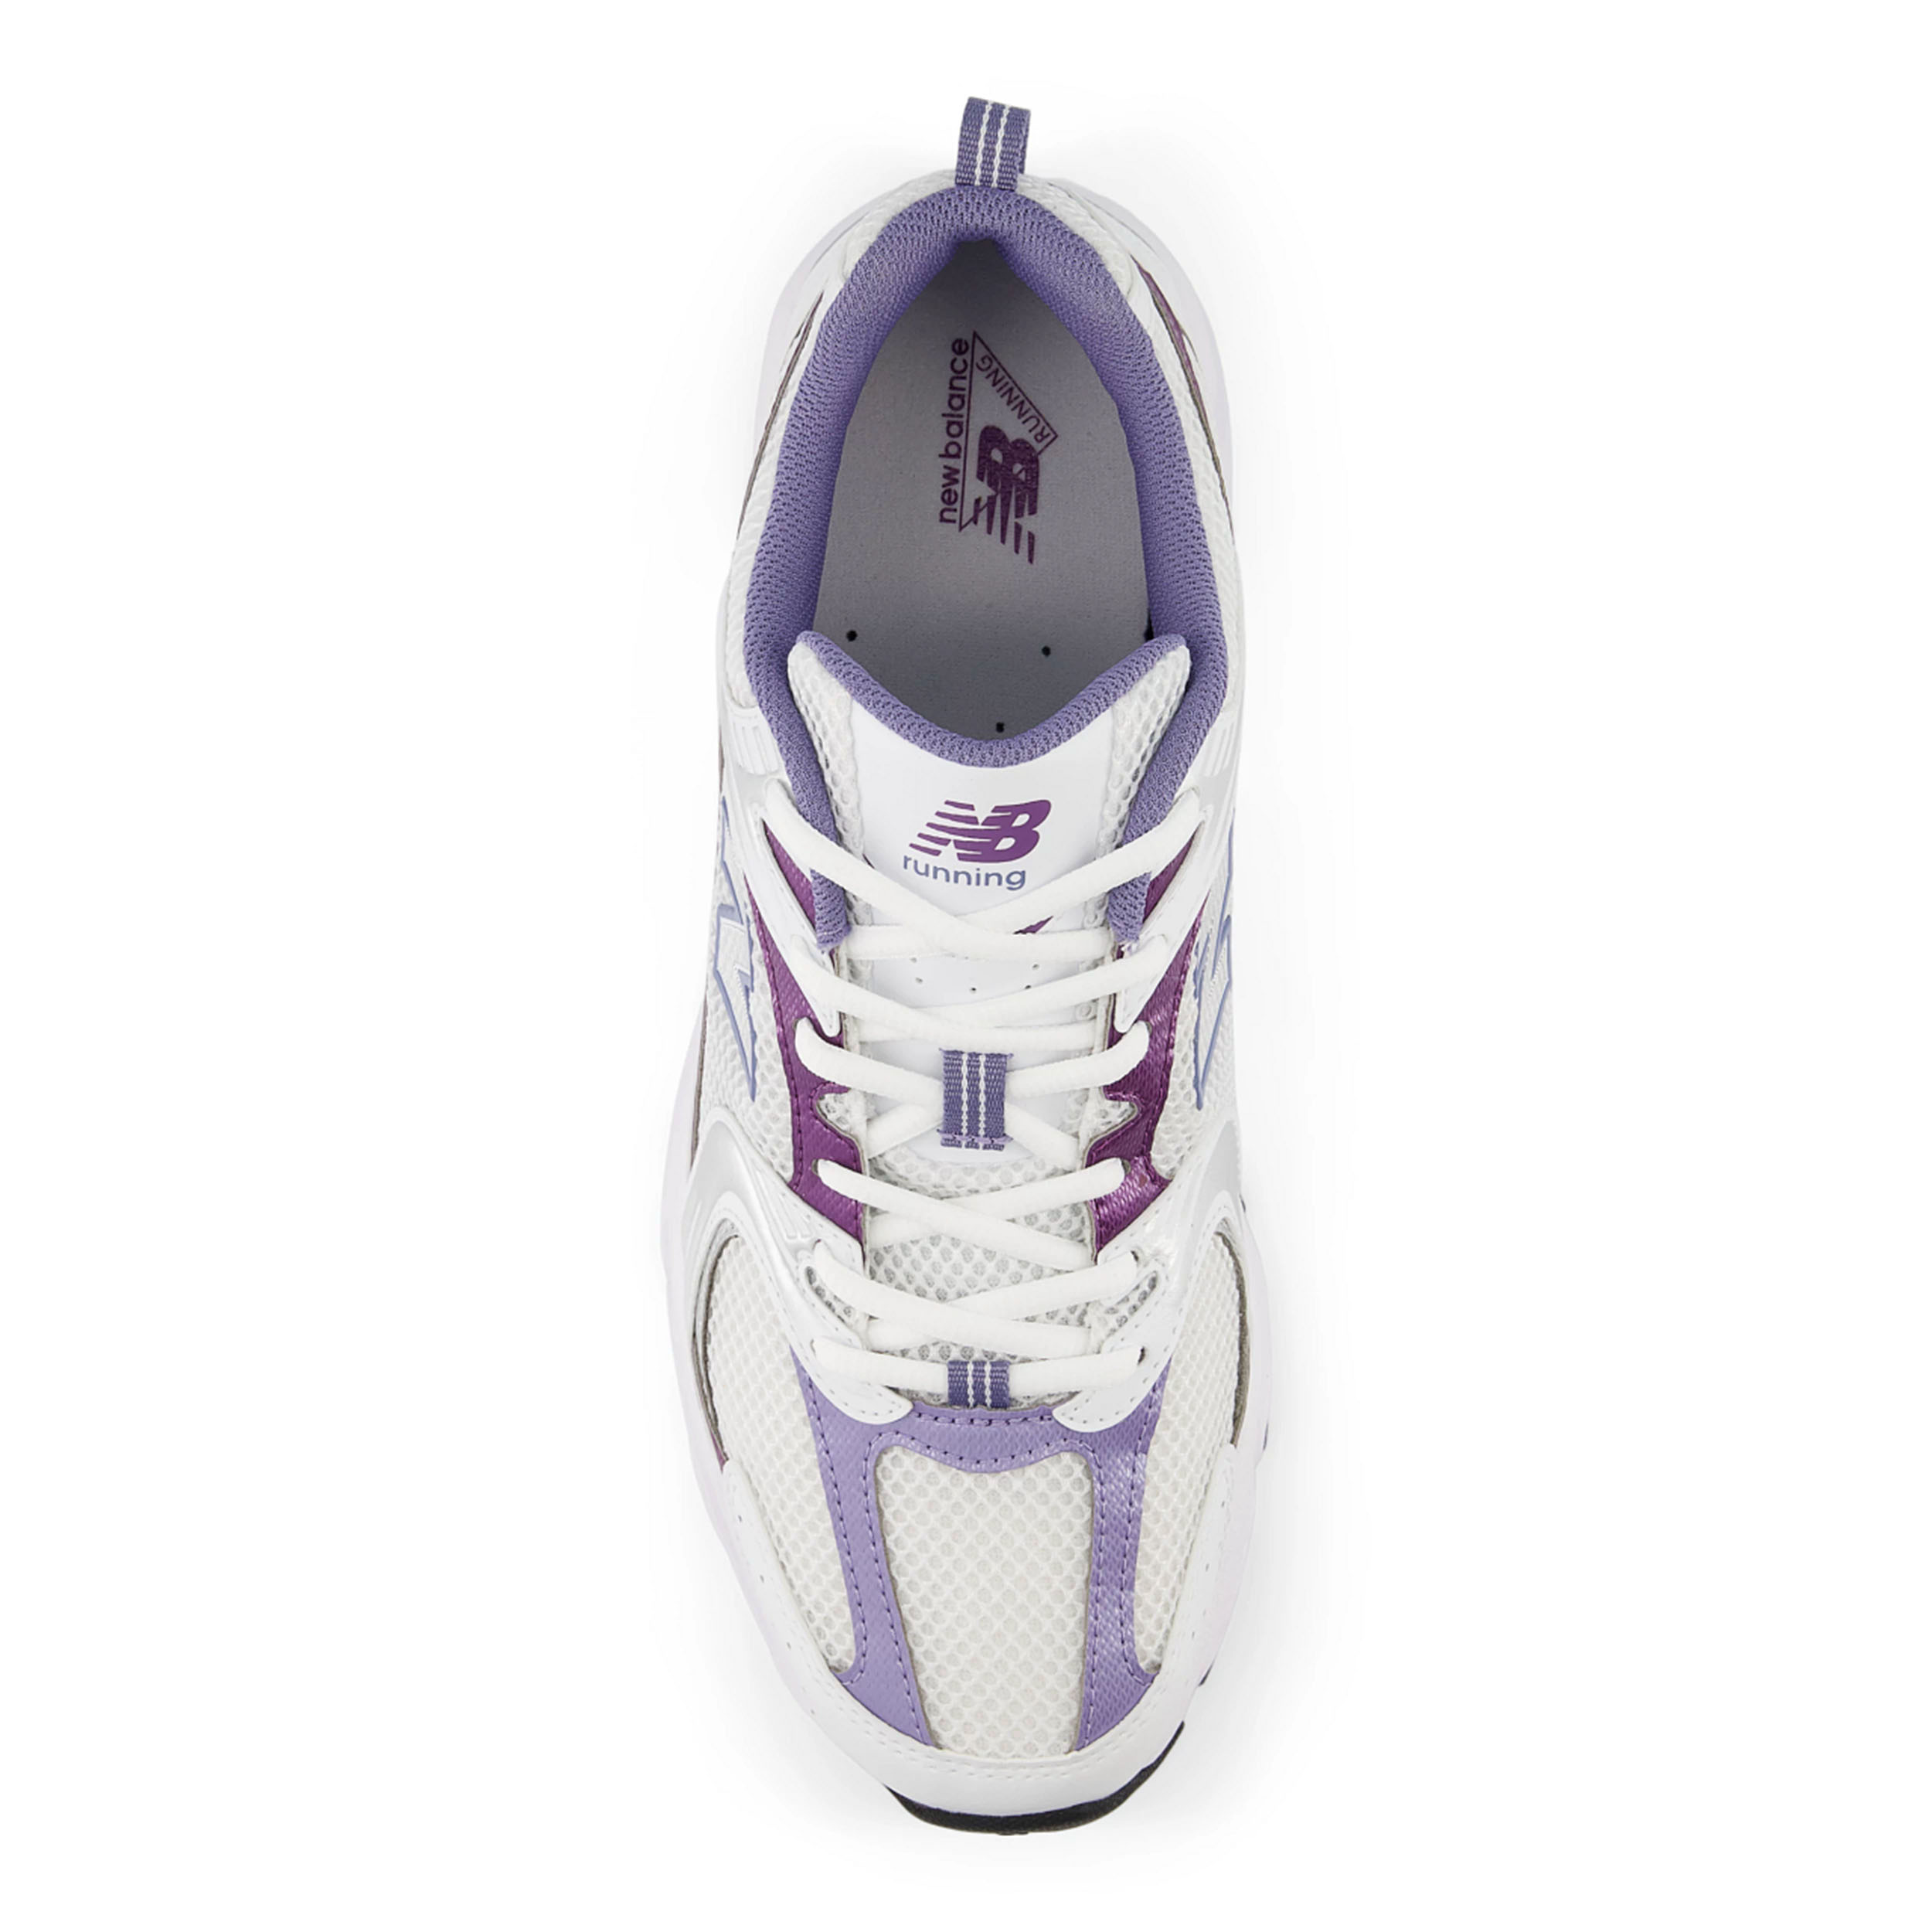 New Balance 530 Sneaker White/Dusted Grape